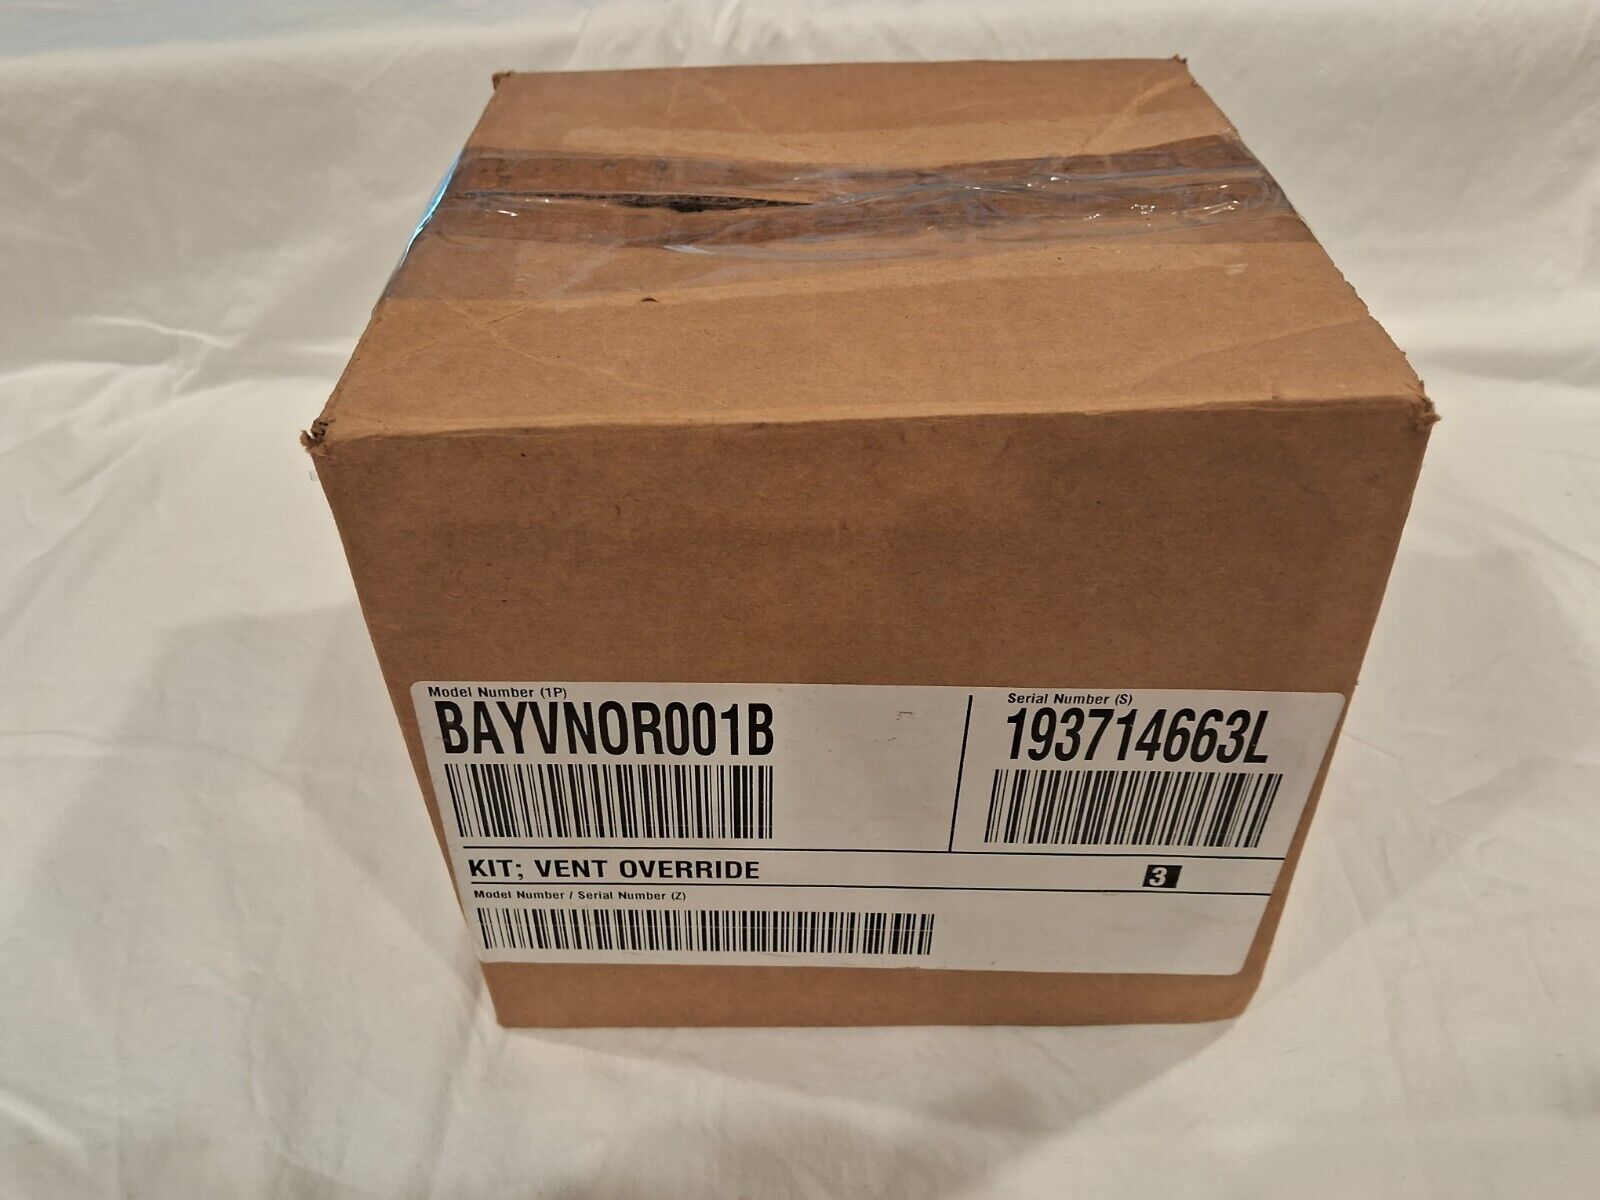 Precedent™ Ventilation Override Kit for Trane BAYVNOR001B RTU - Brand NEW